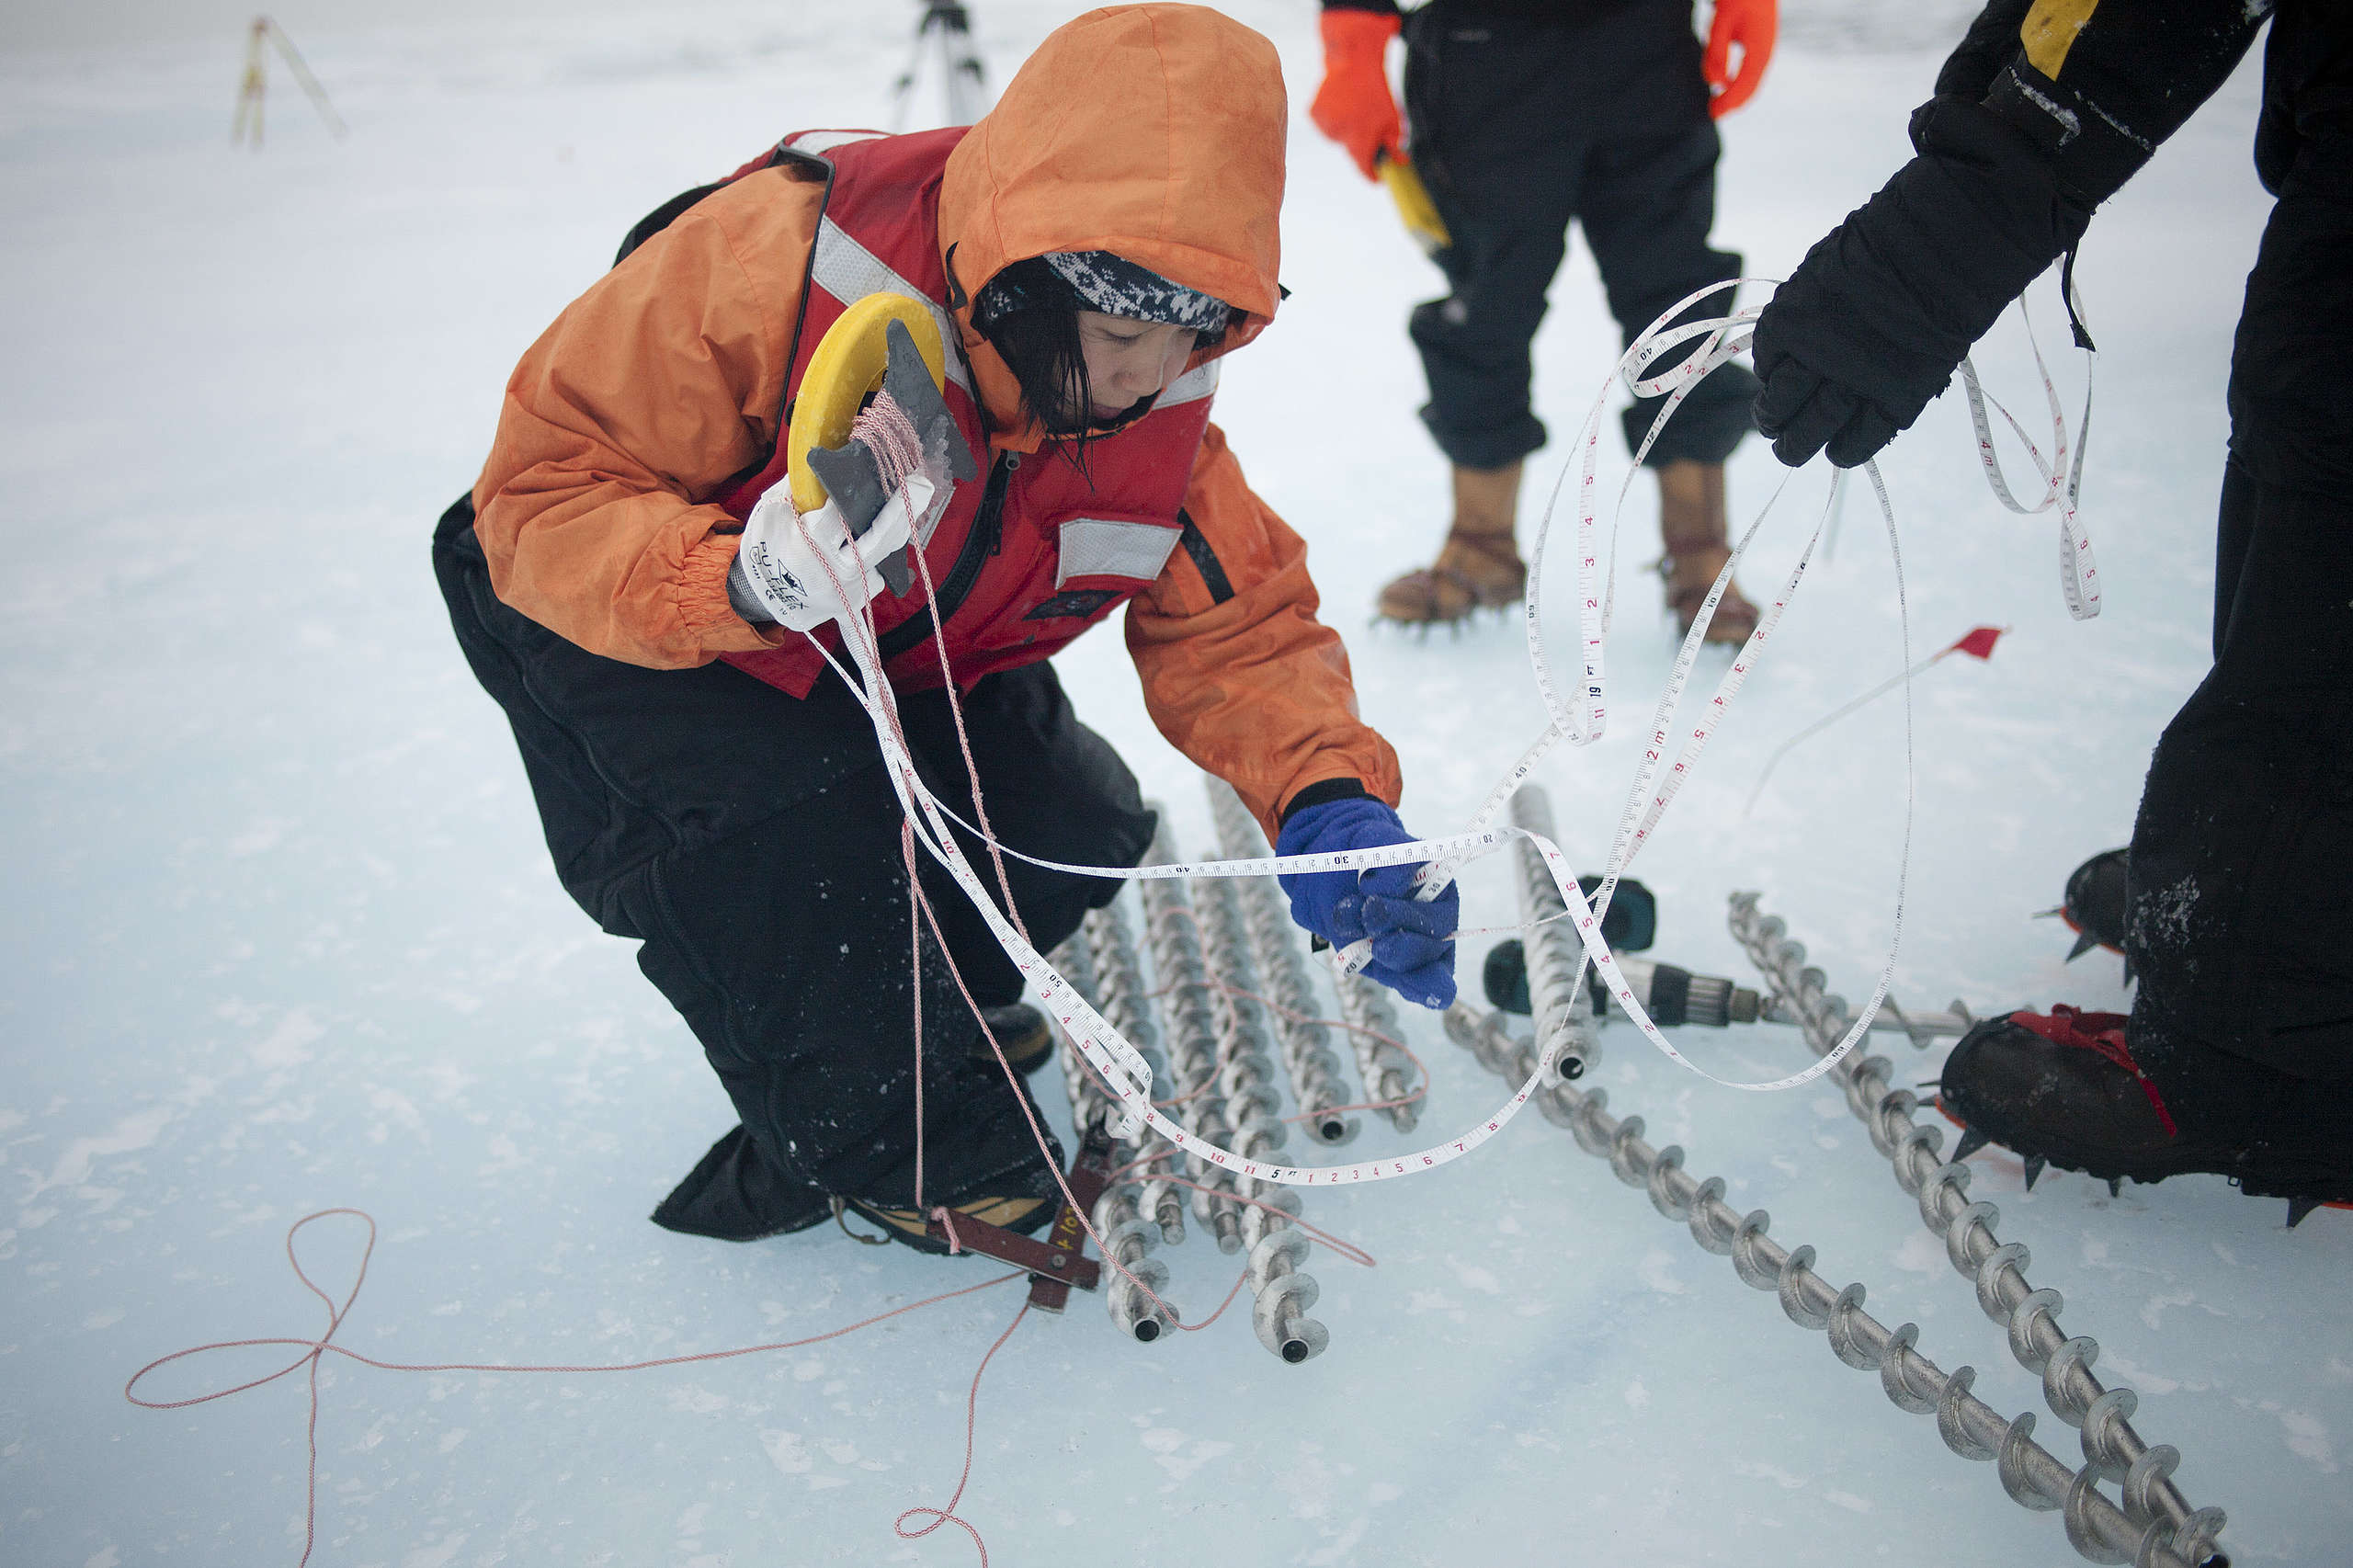 Gloria帶著許多設備，在北極海冰上進行測量。